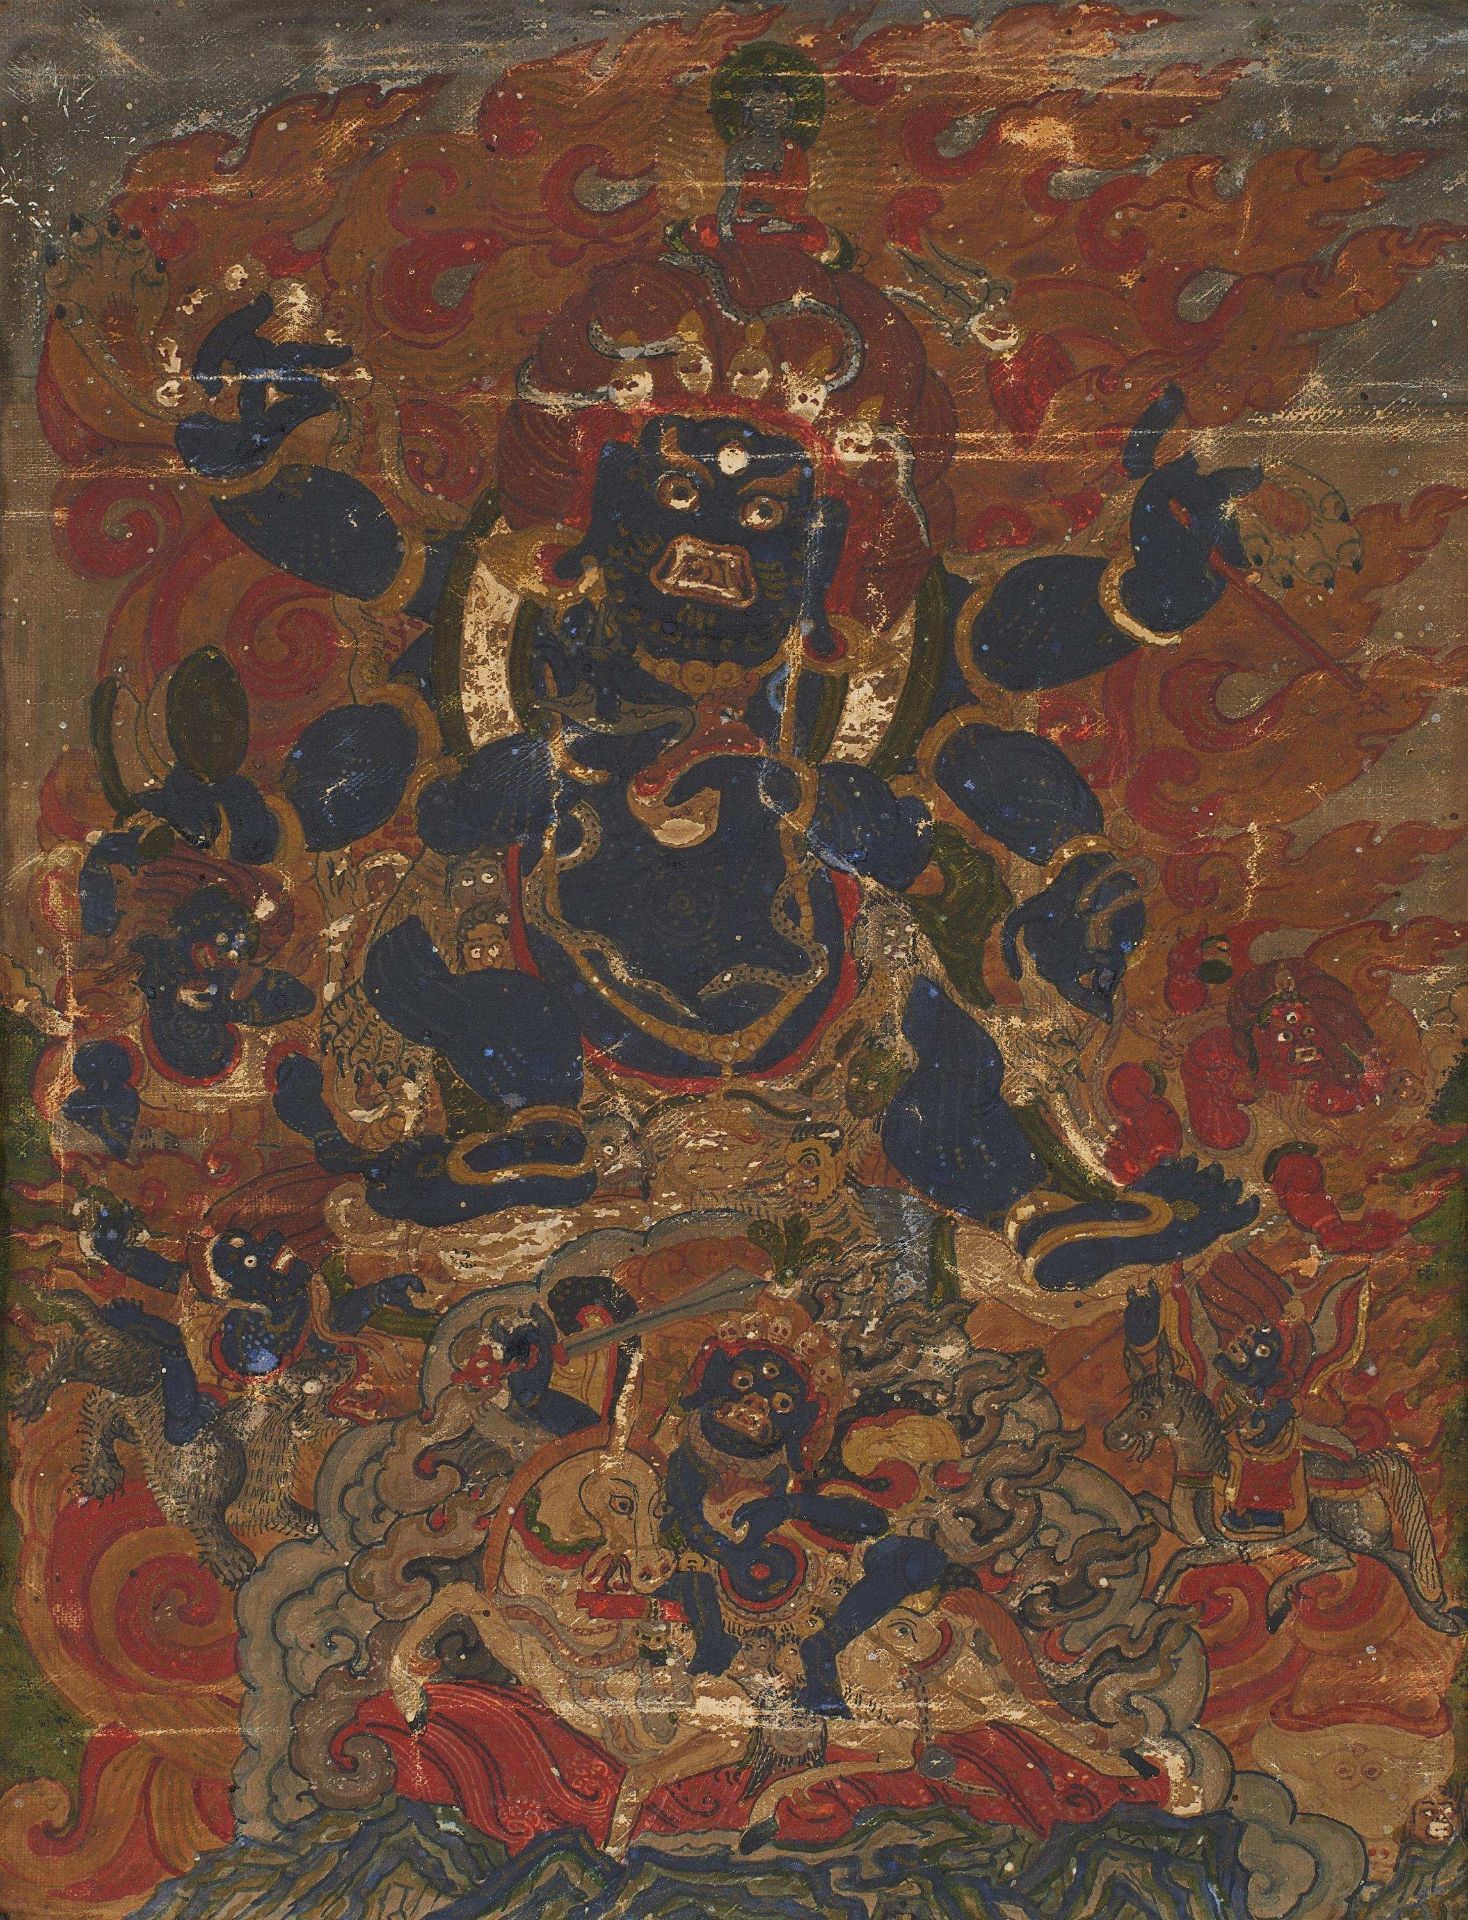 SMALL SCALE THANGKA OF MAHAKALA. Tibet. Probably 16./17. c. Color on fabric, with silk mounted as